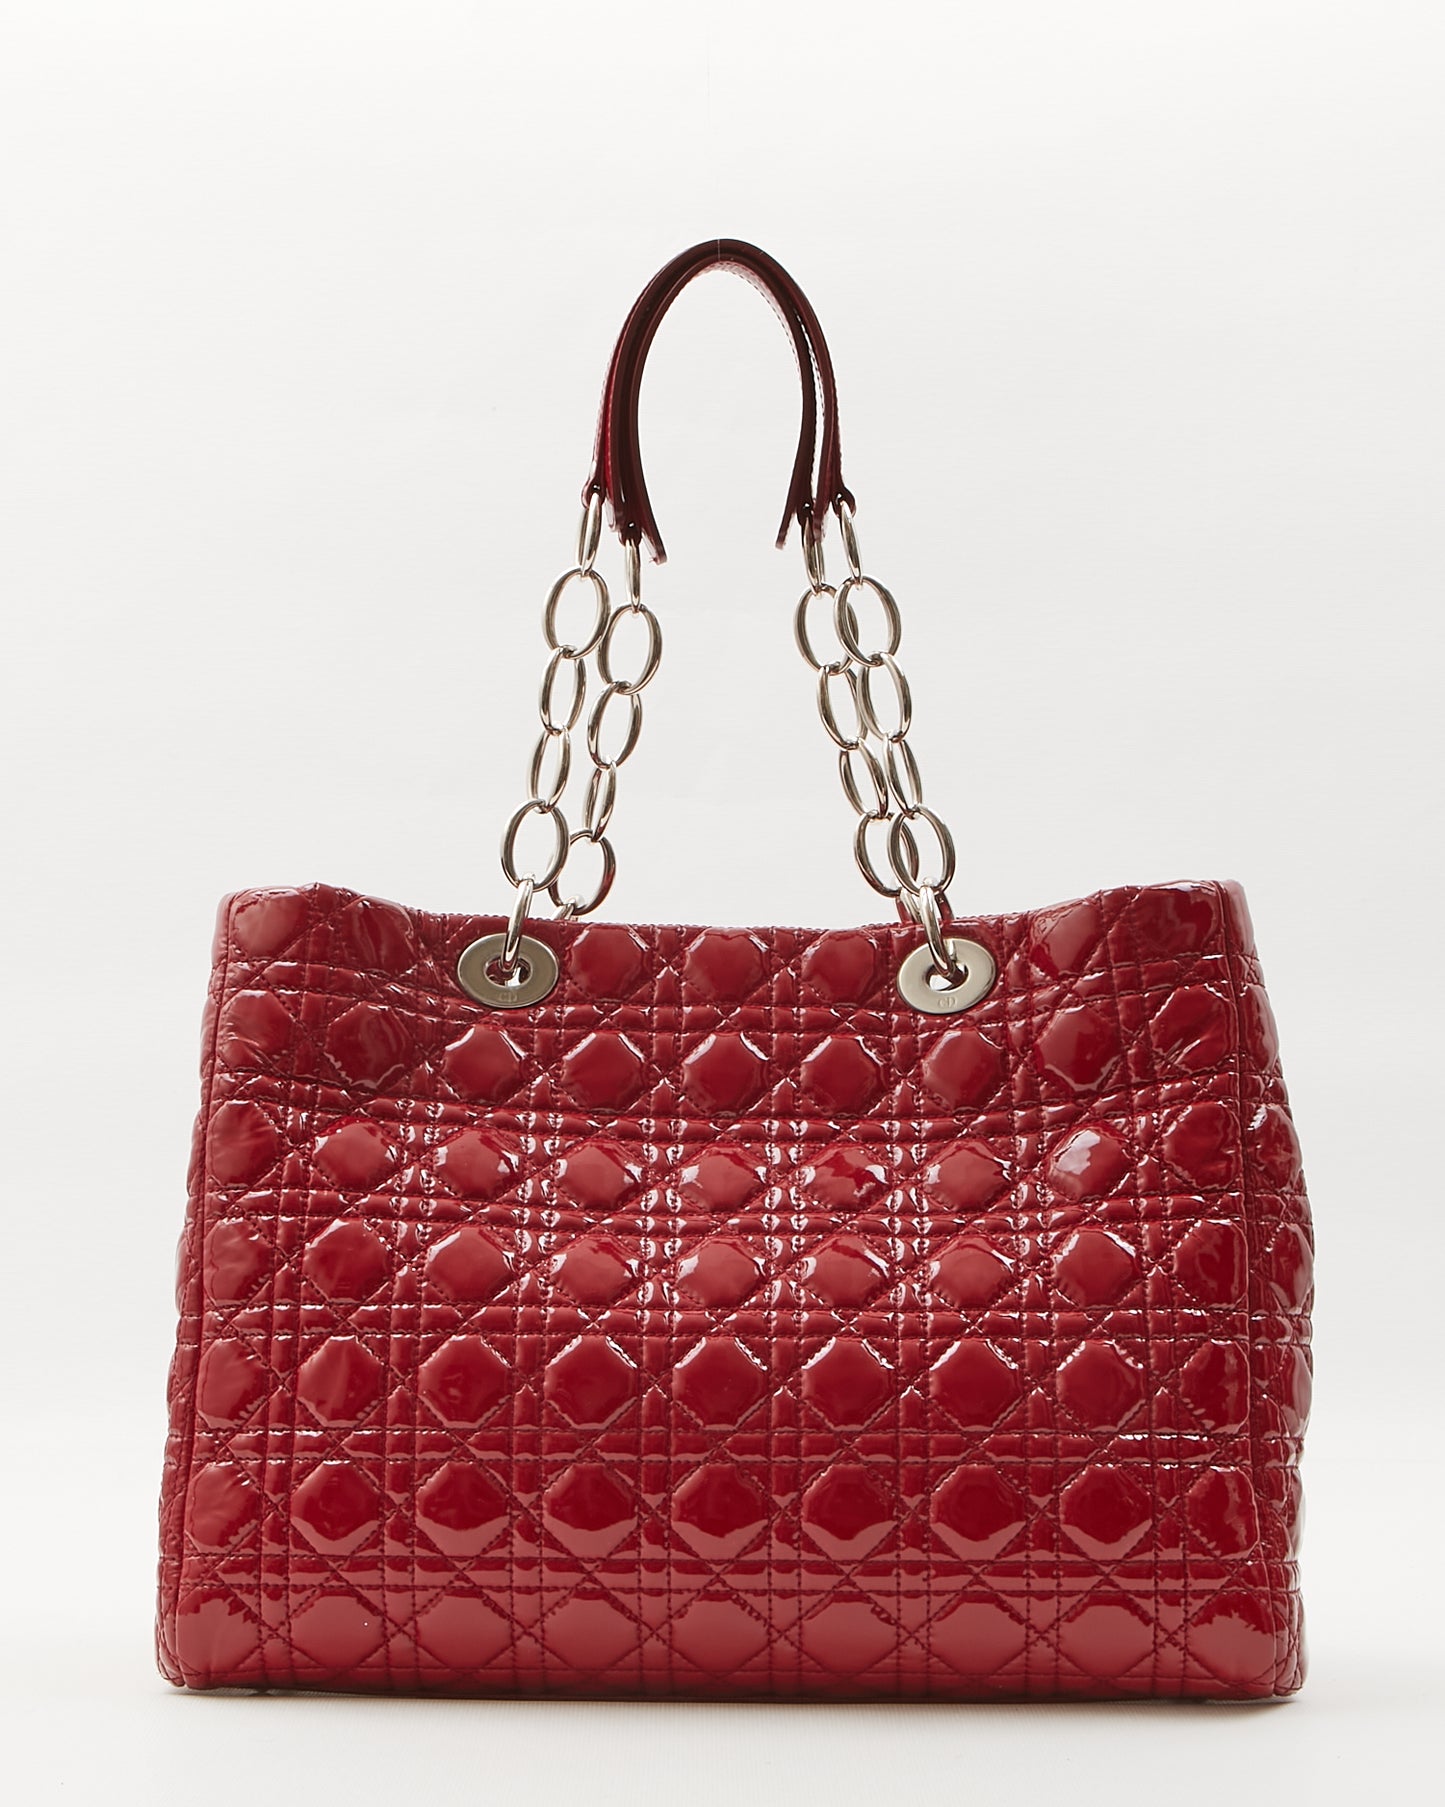 Grand sac cabas Cannage en cuir verni rouge Dior